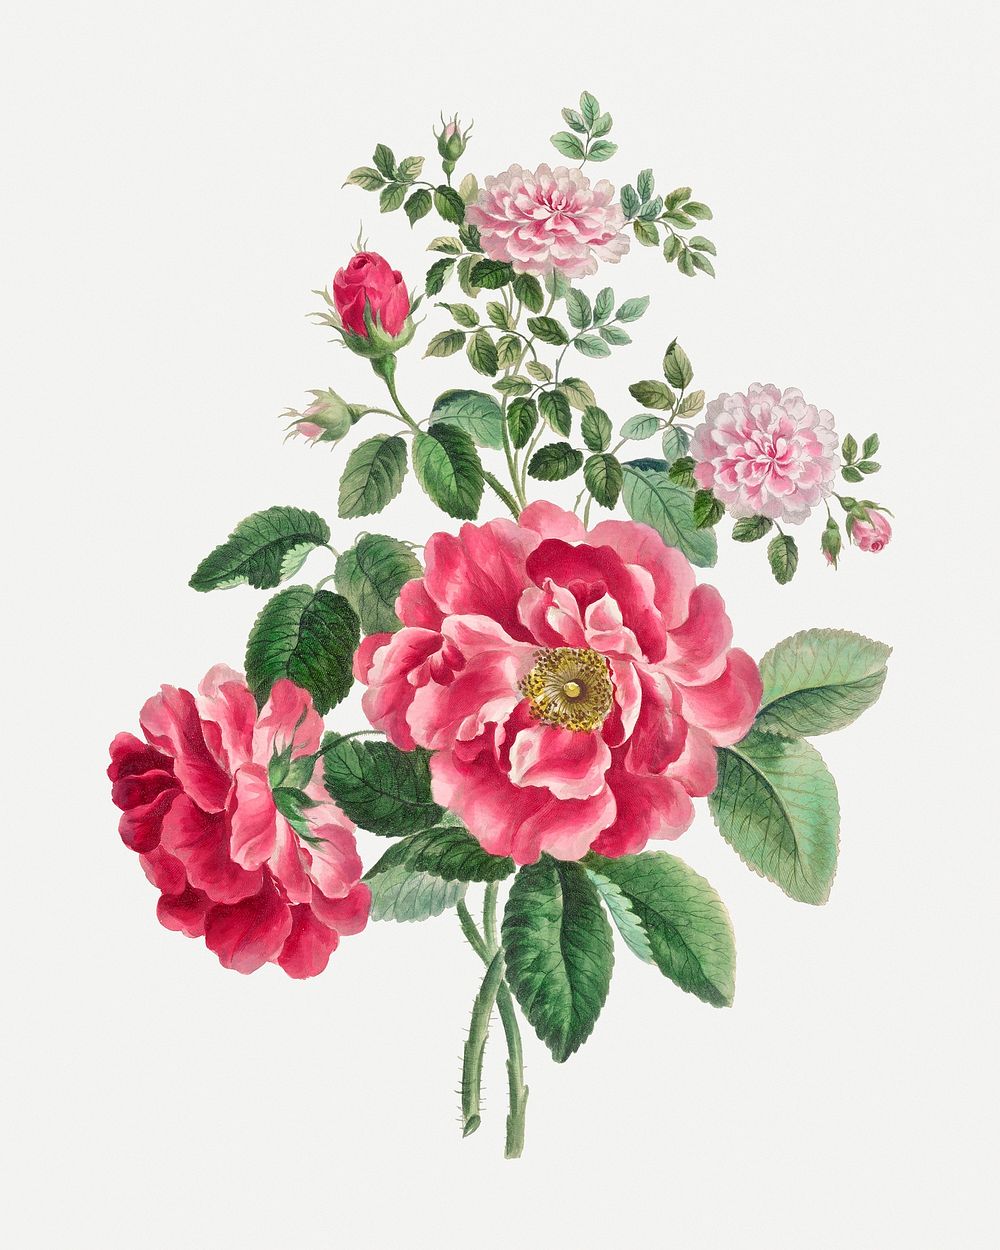 Vintage pink rose floral art print, remixed from artworks by John Edwards